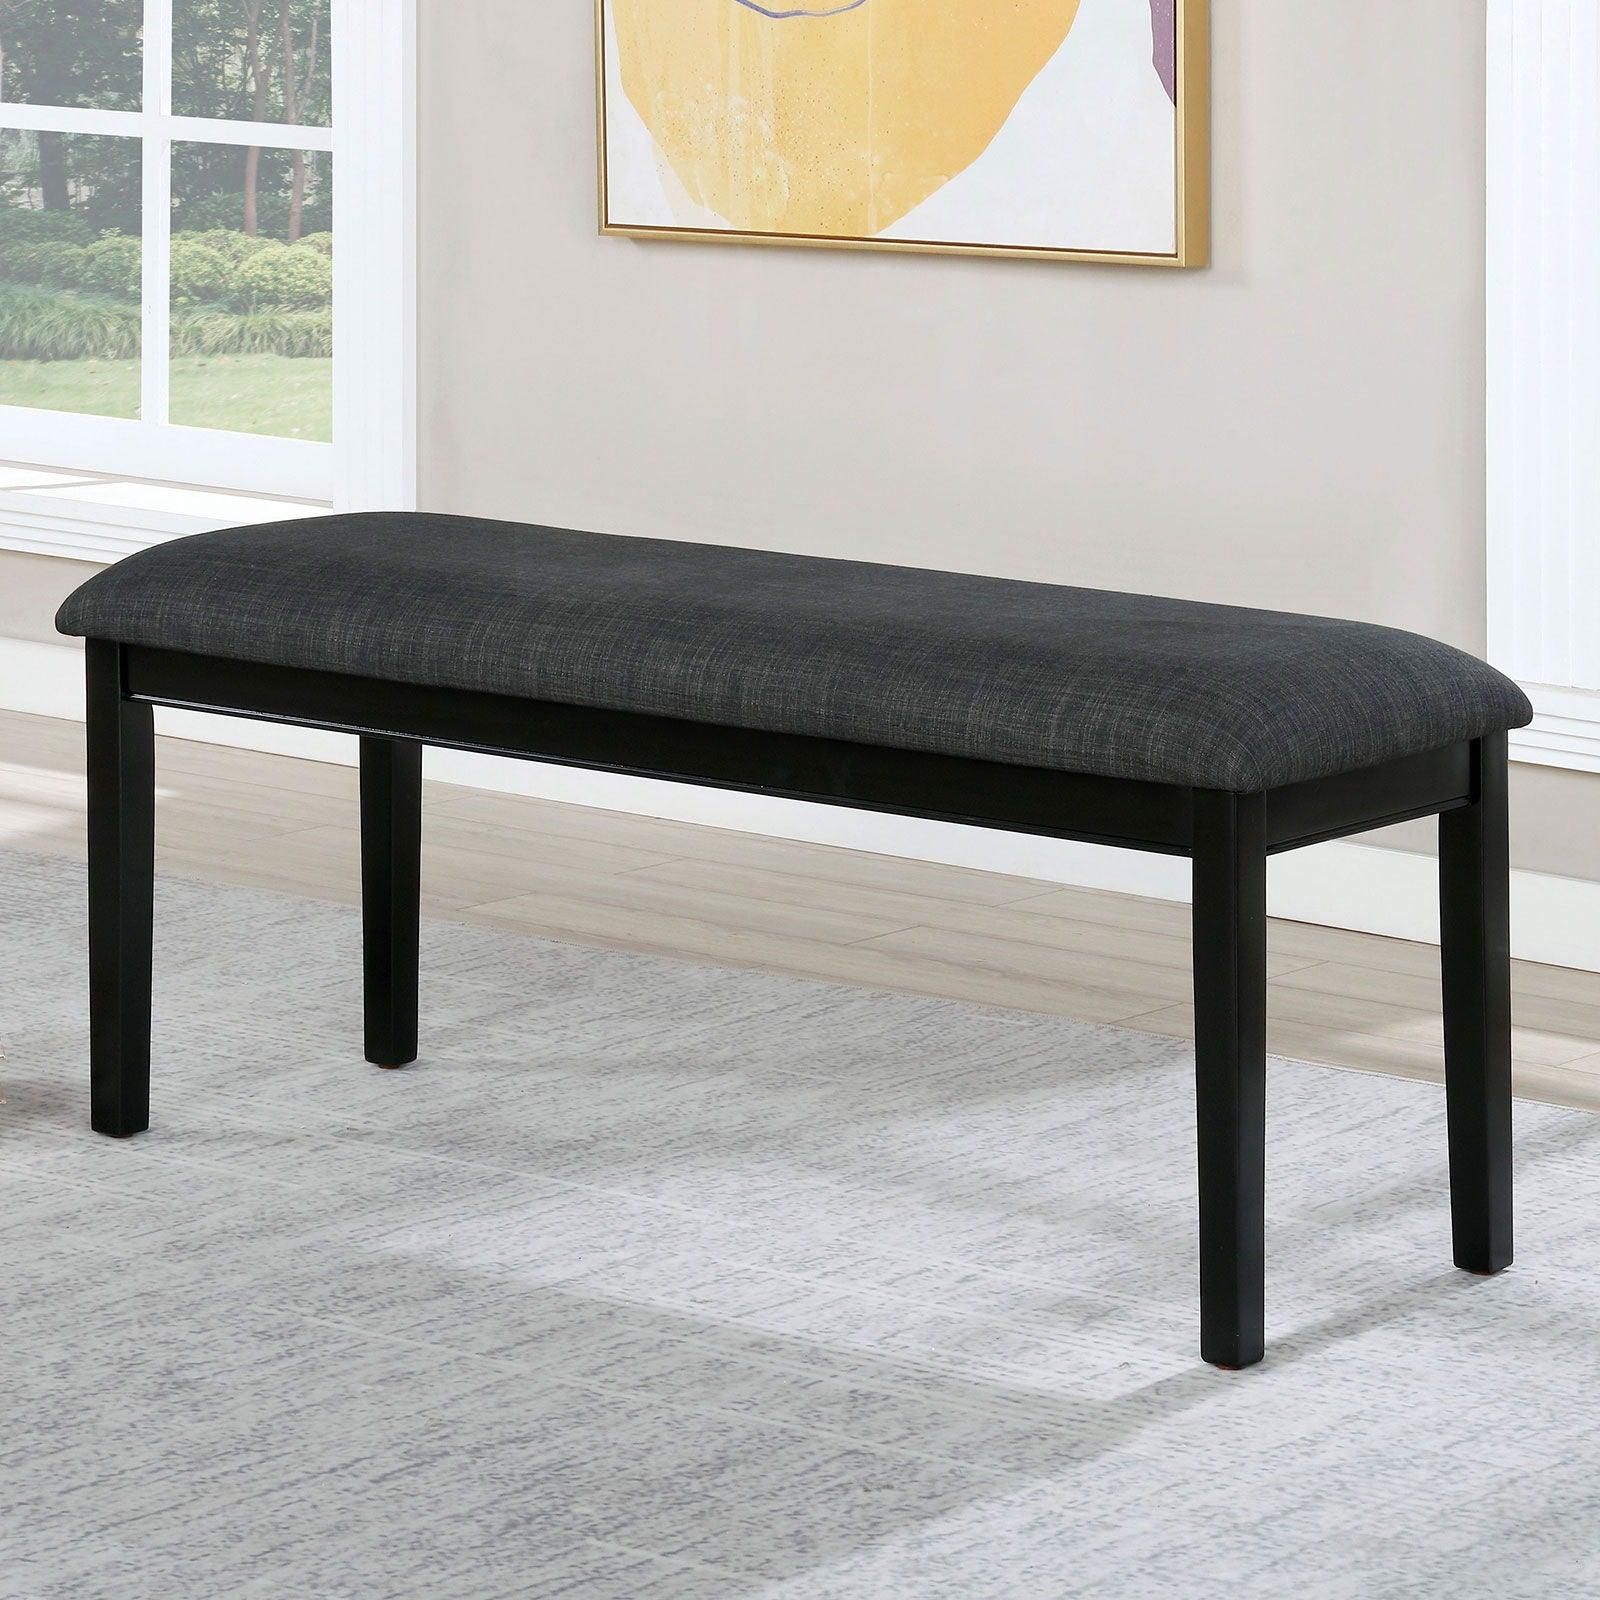 Furniture of America - Carbey - Bench - Black / Gray - 5th Avenue Furniture